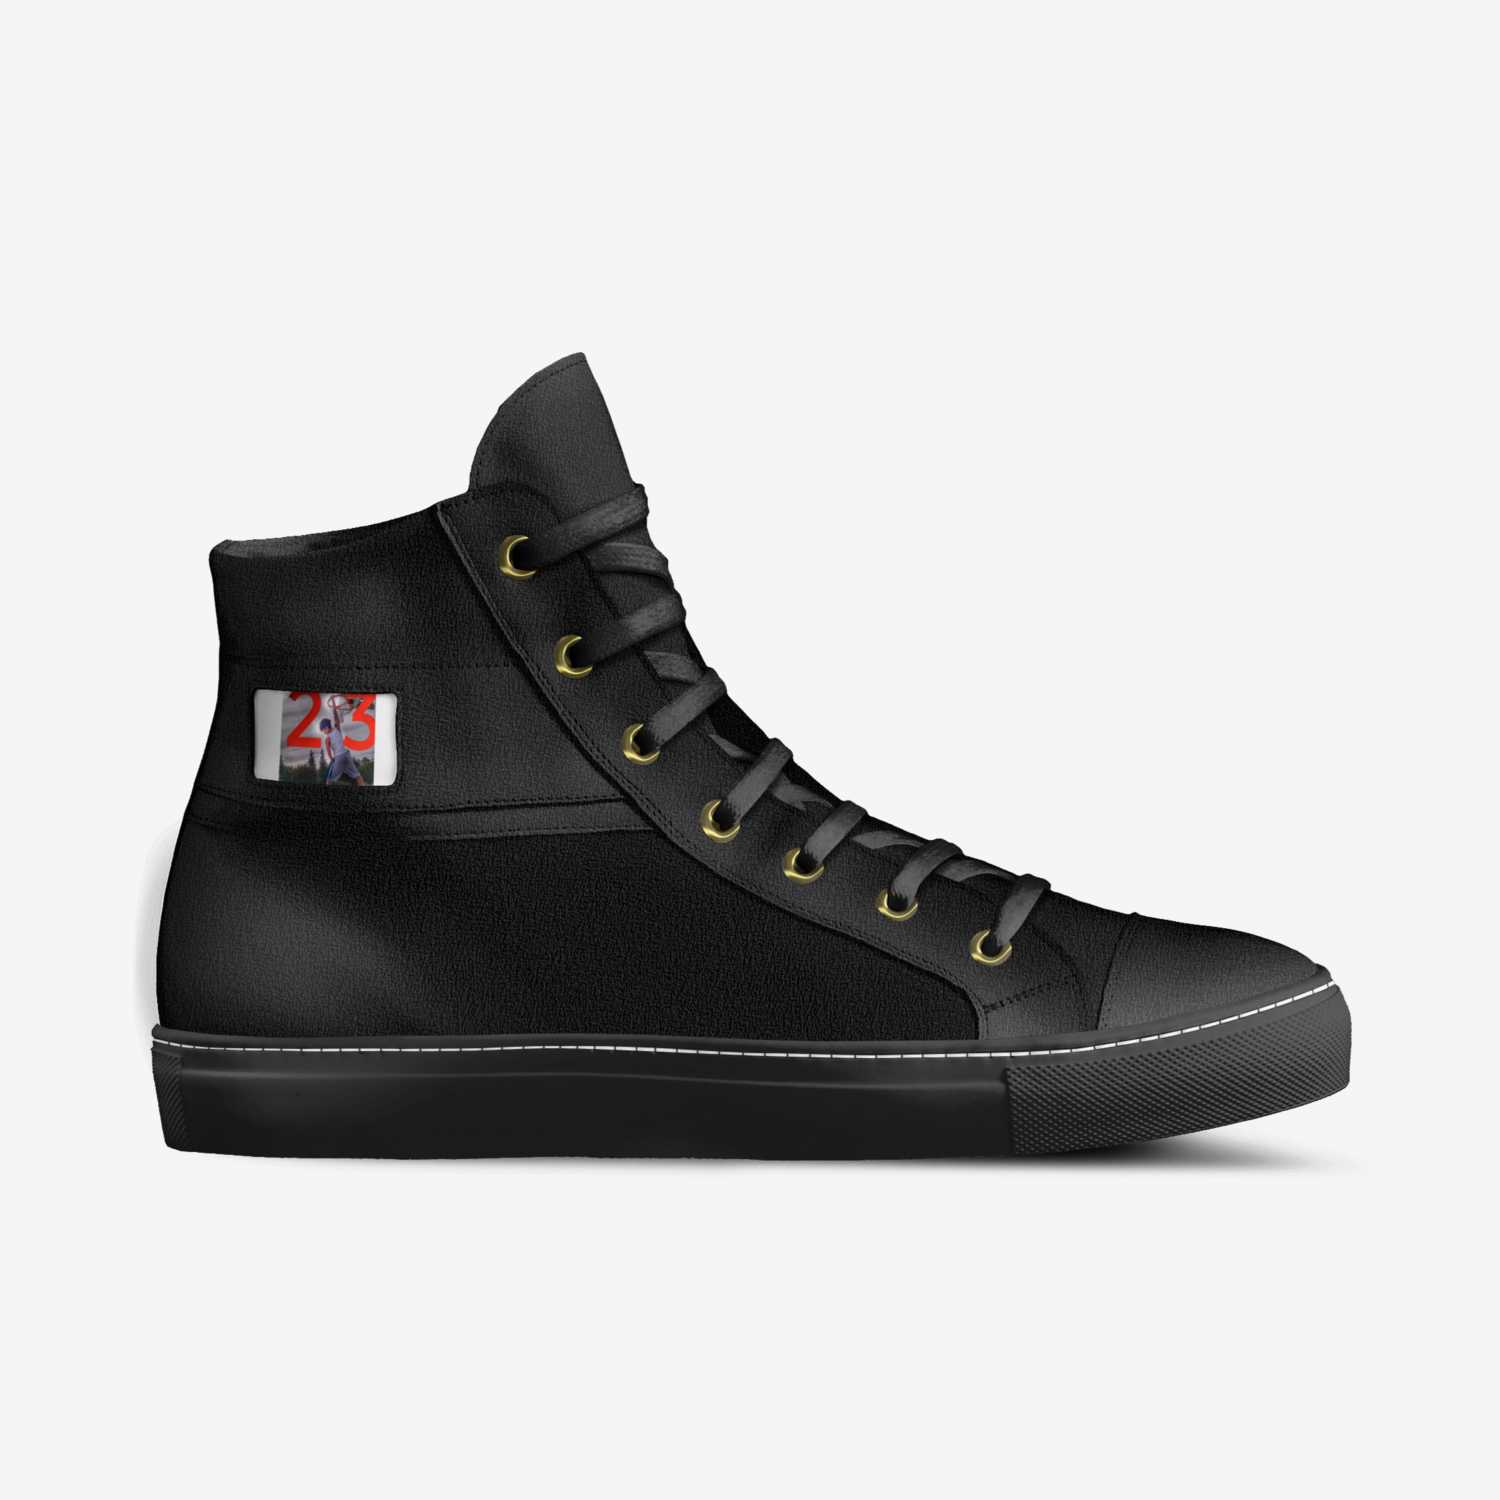 Permboyz custom made in Italy shoes by Joe Rock | Side view